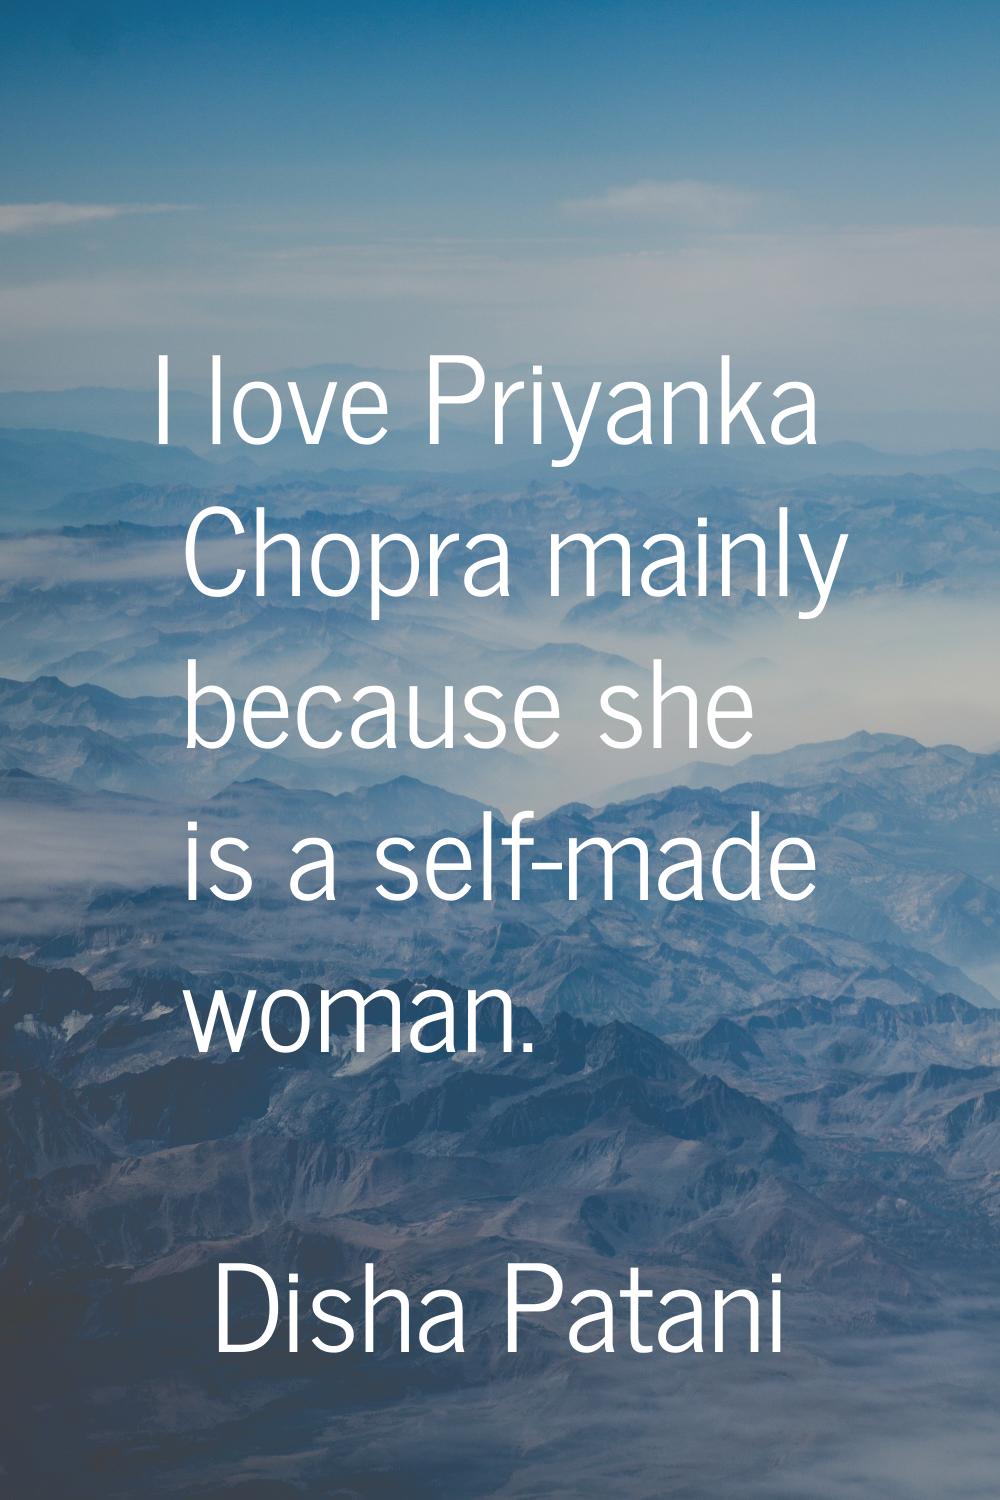 I love Priyanka Chopra mainly because she is a self-made woman.